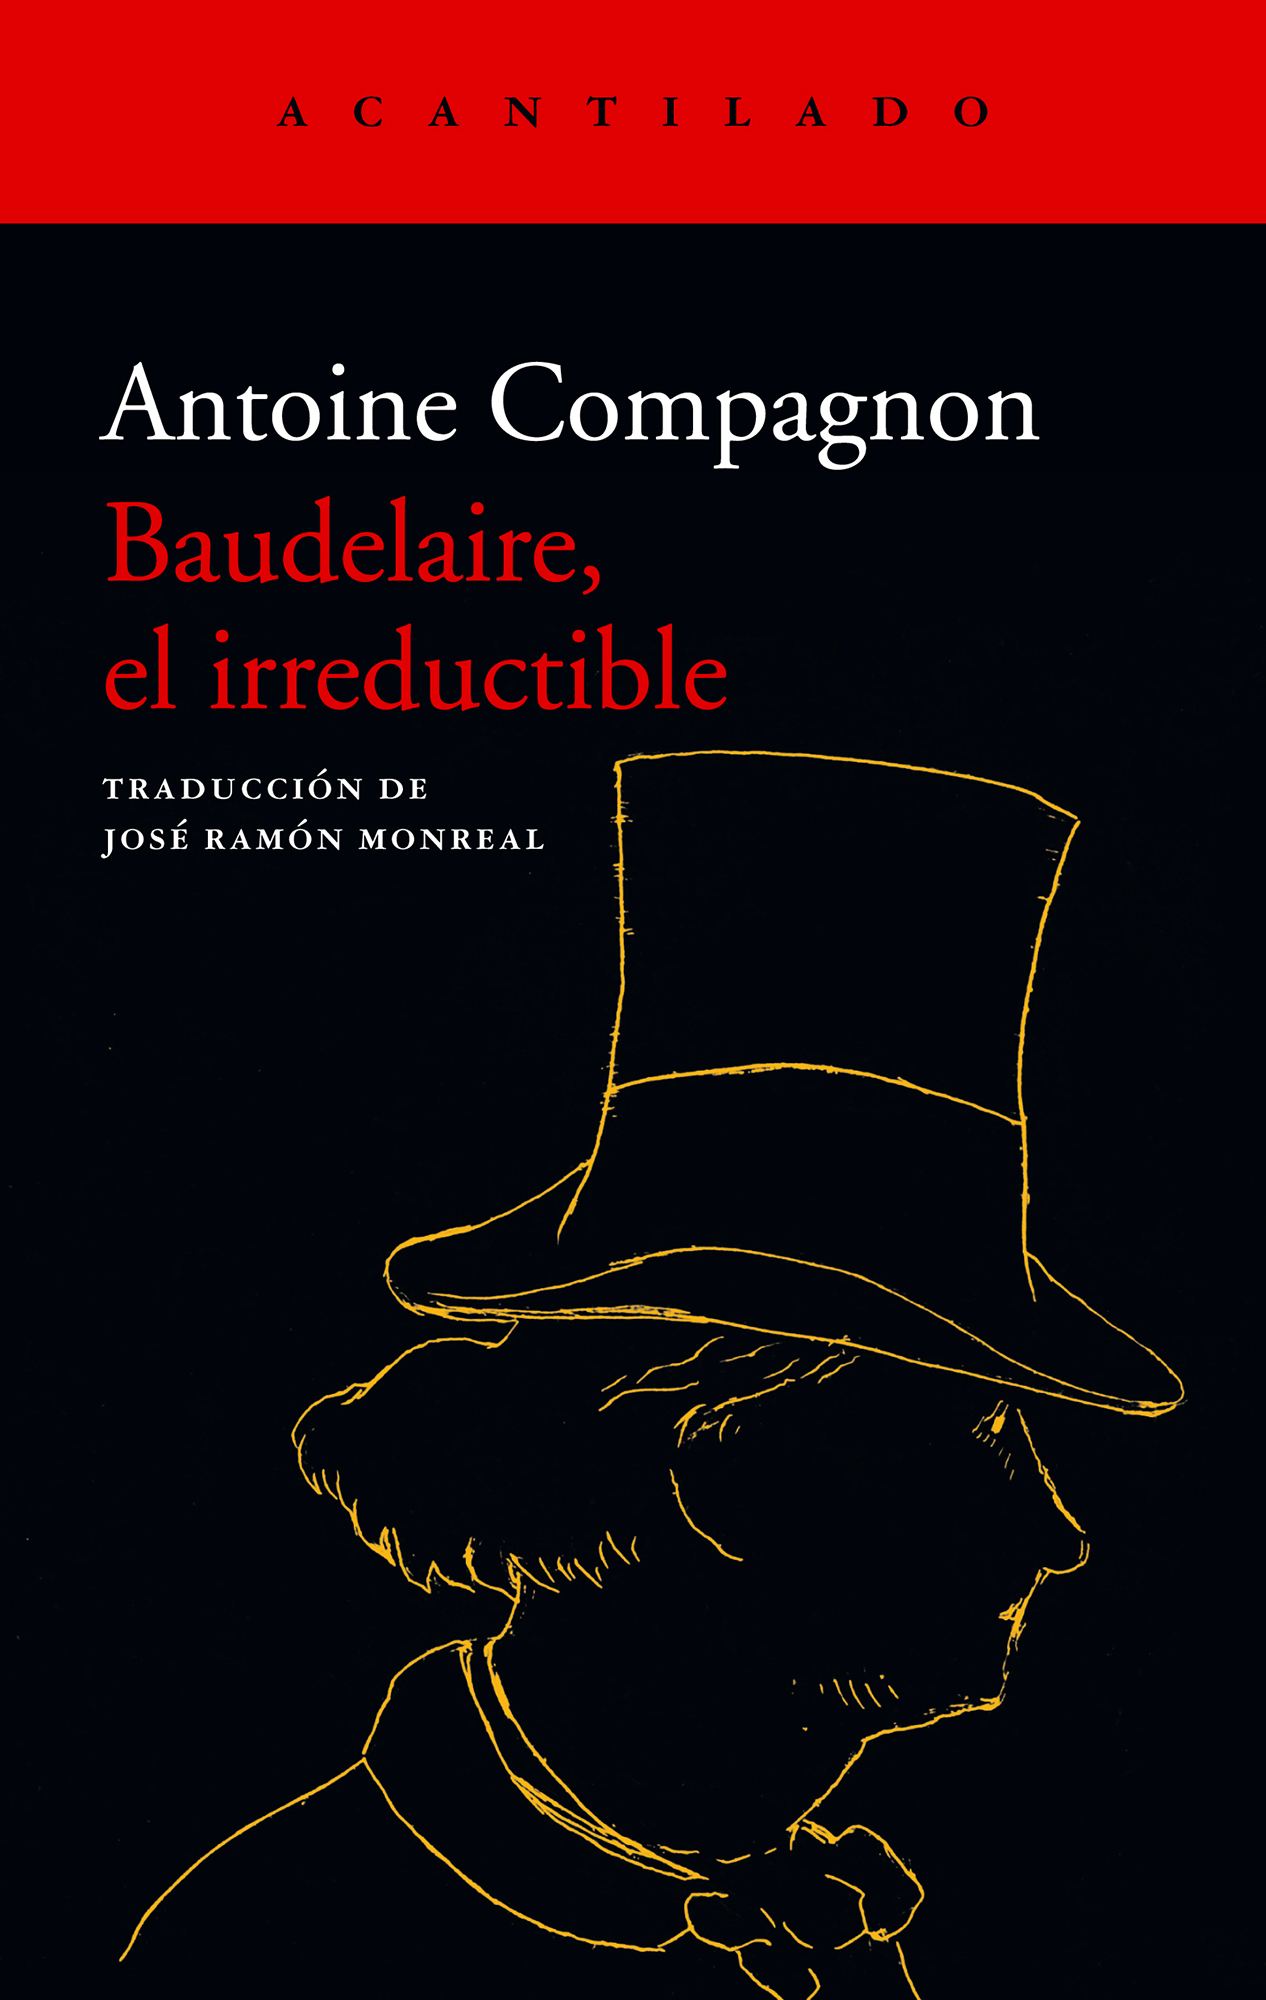 Cover photo of Baudelaire, el irreductible